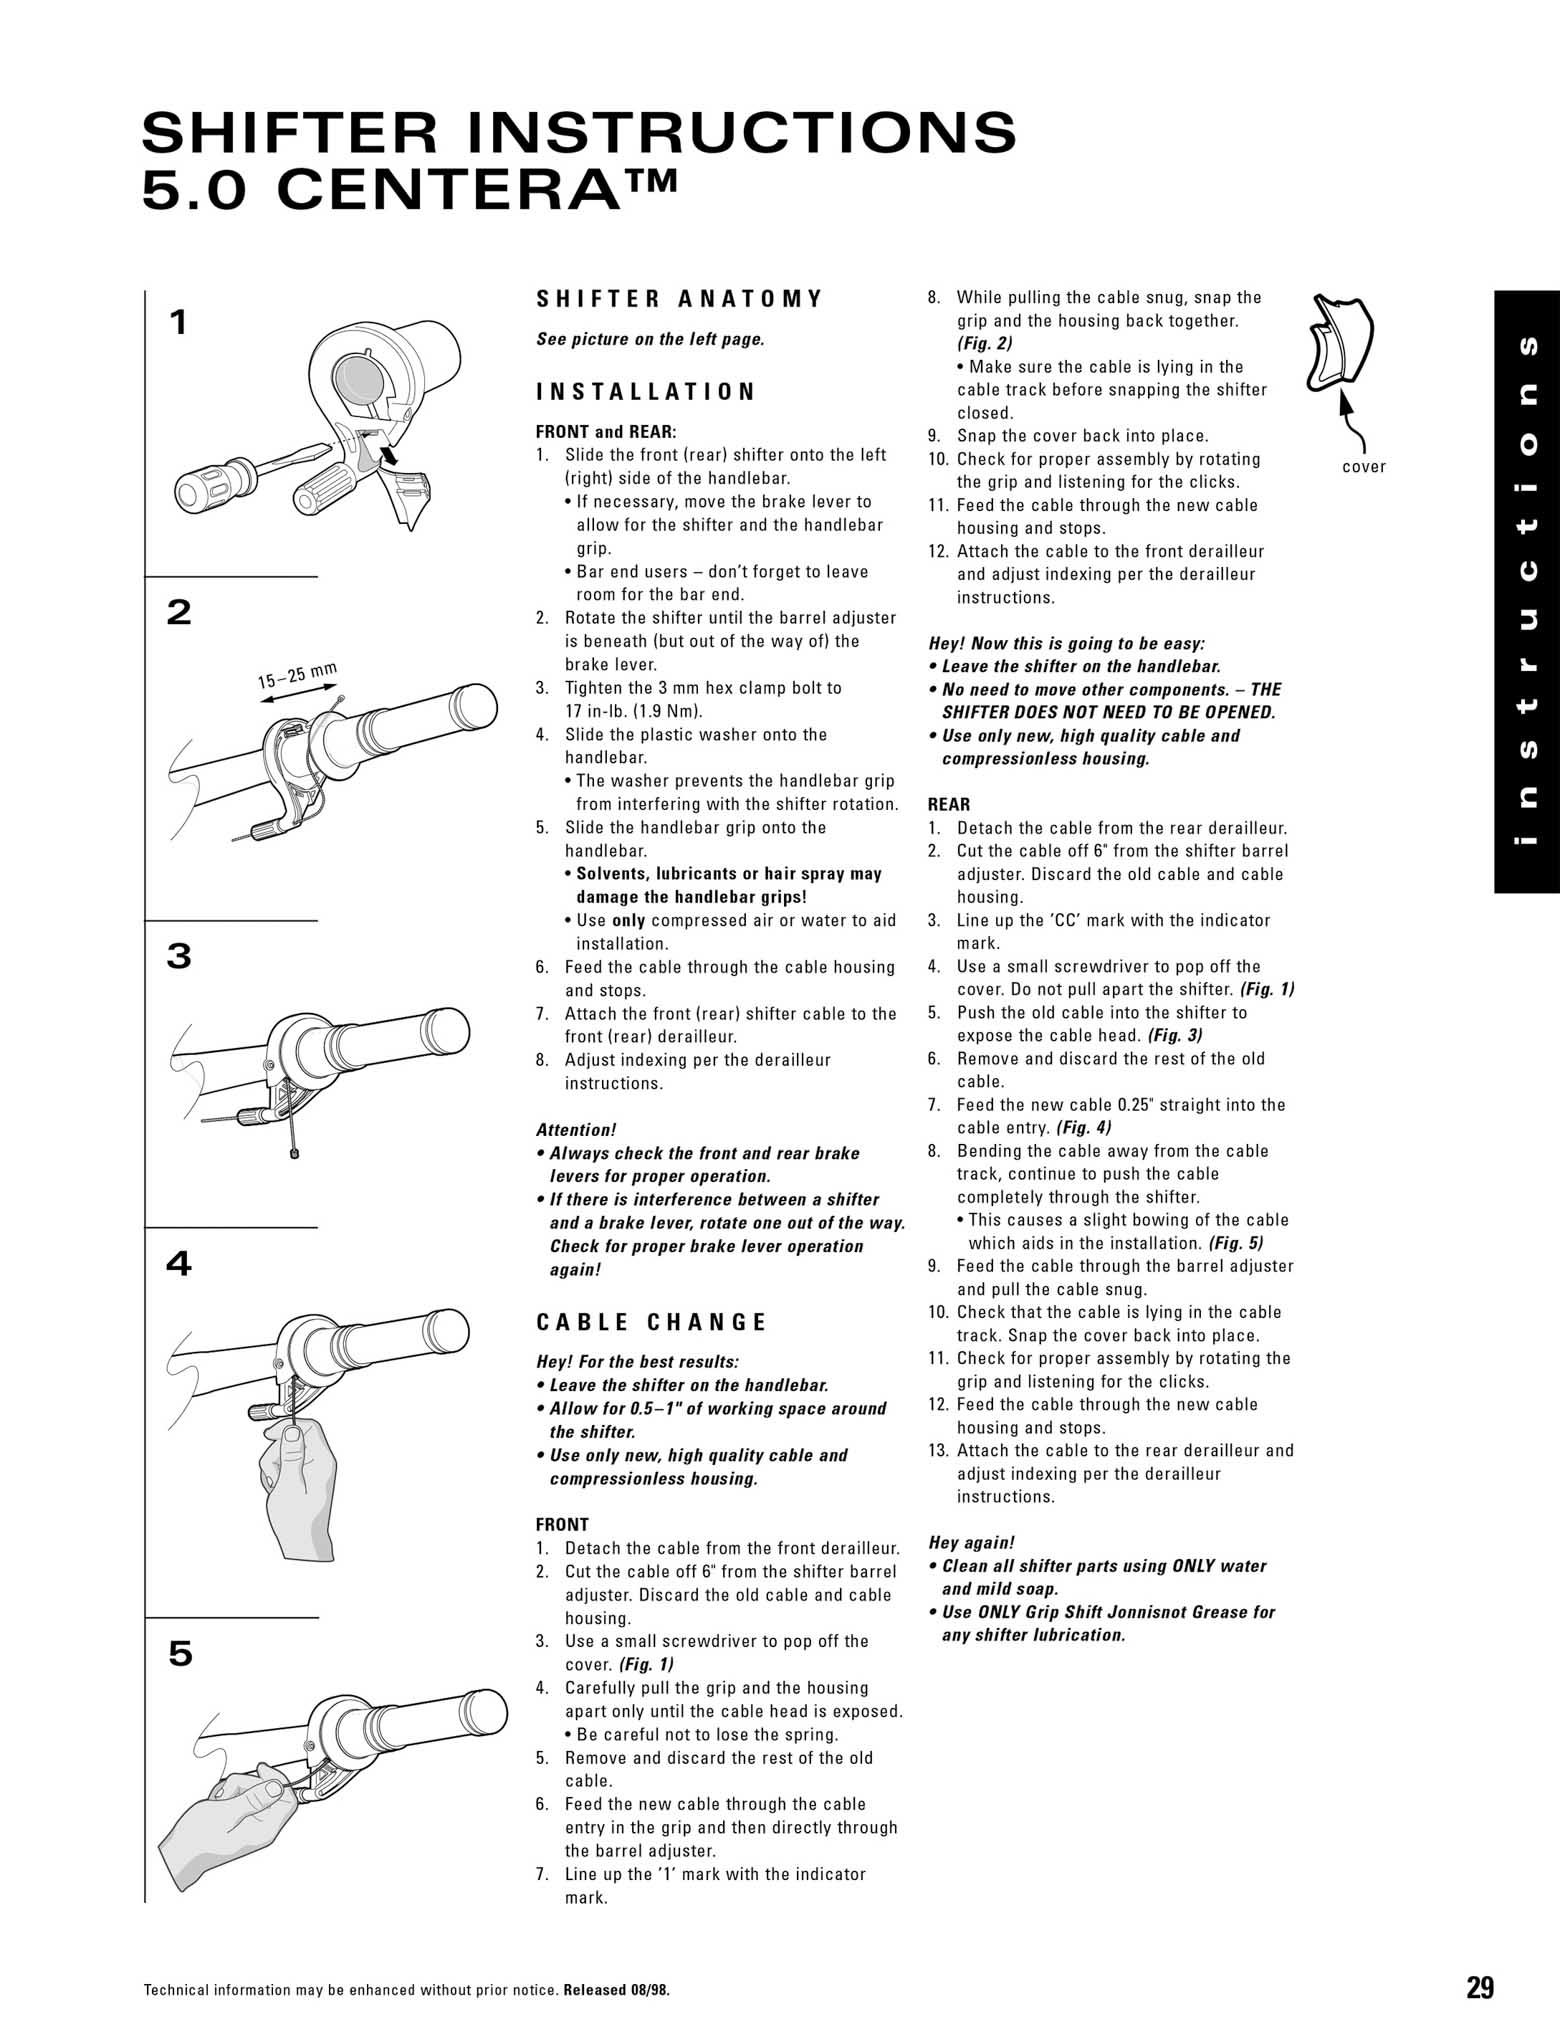 SRAM Dealer Technical Manual 1999 page 029 main image